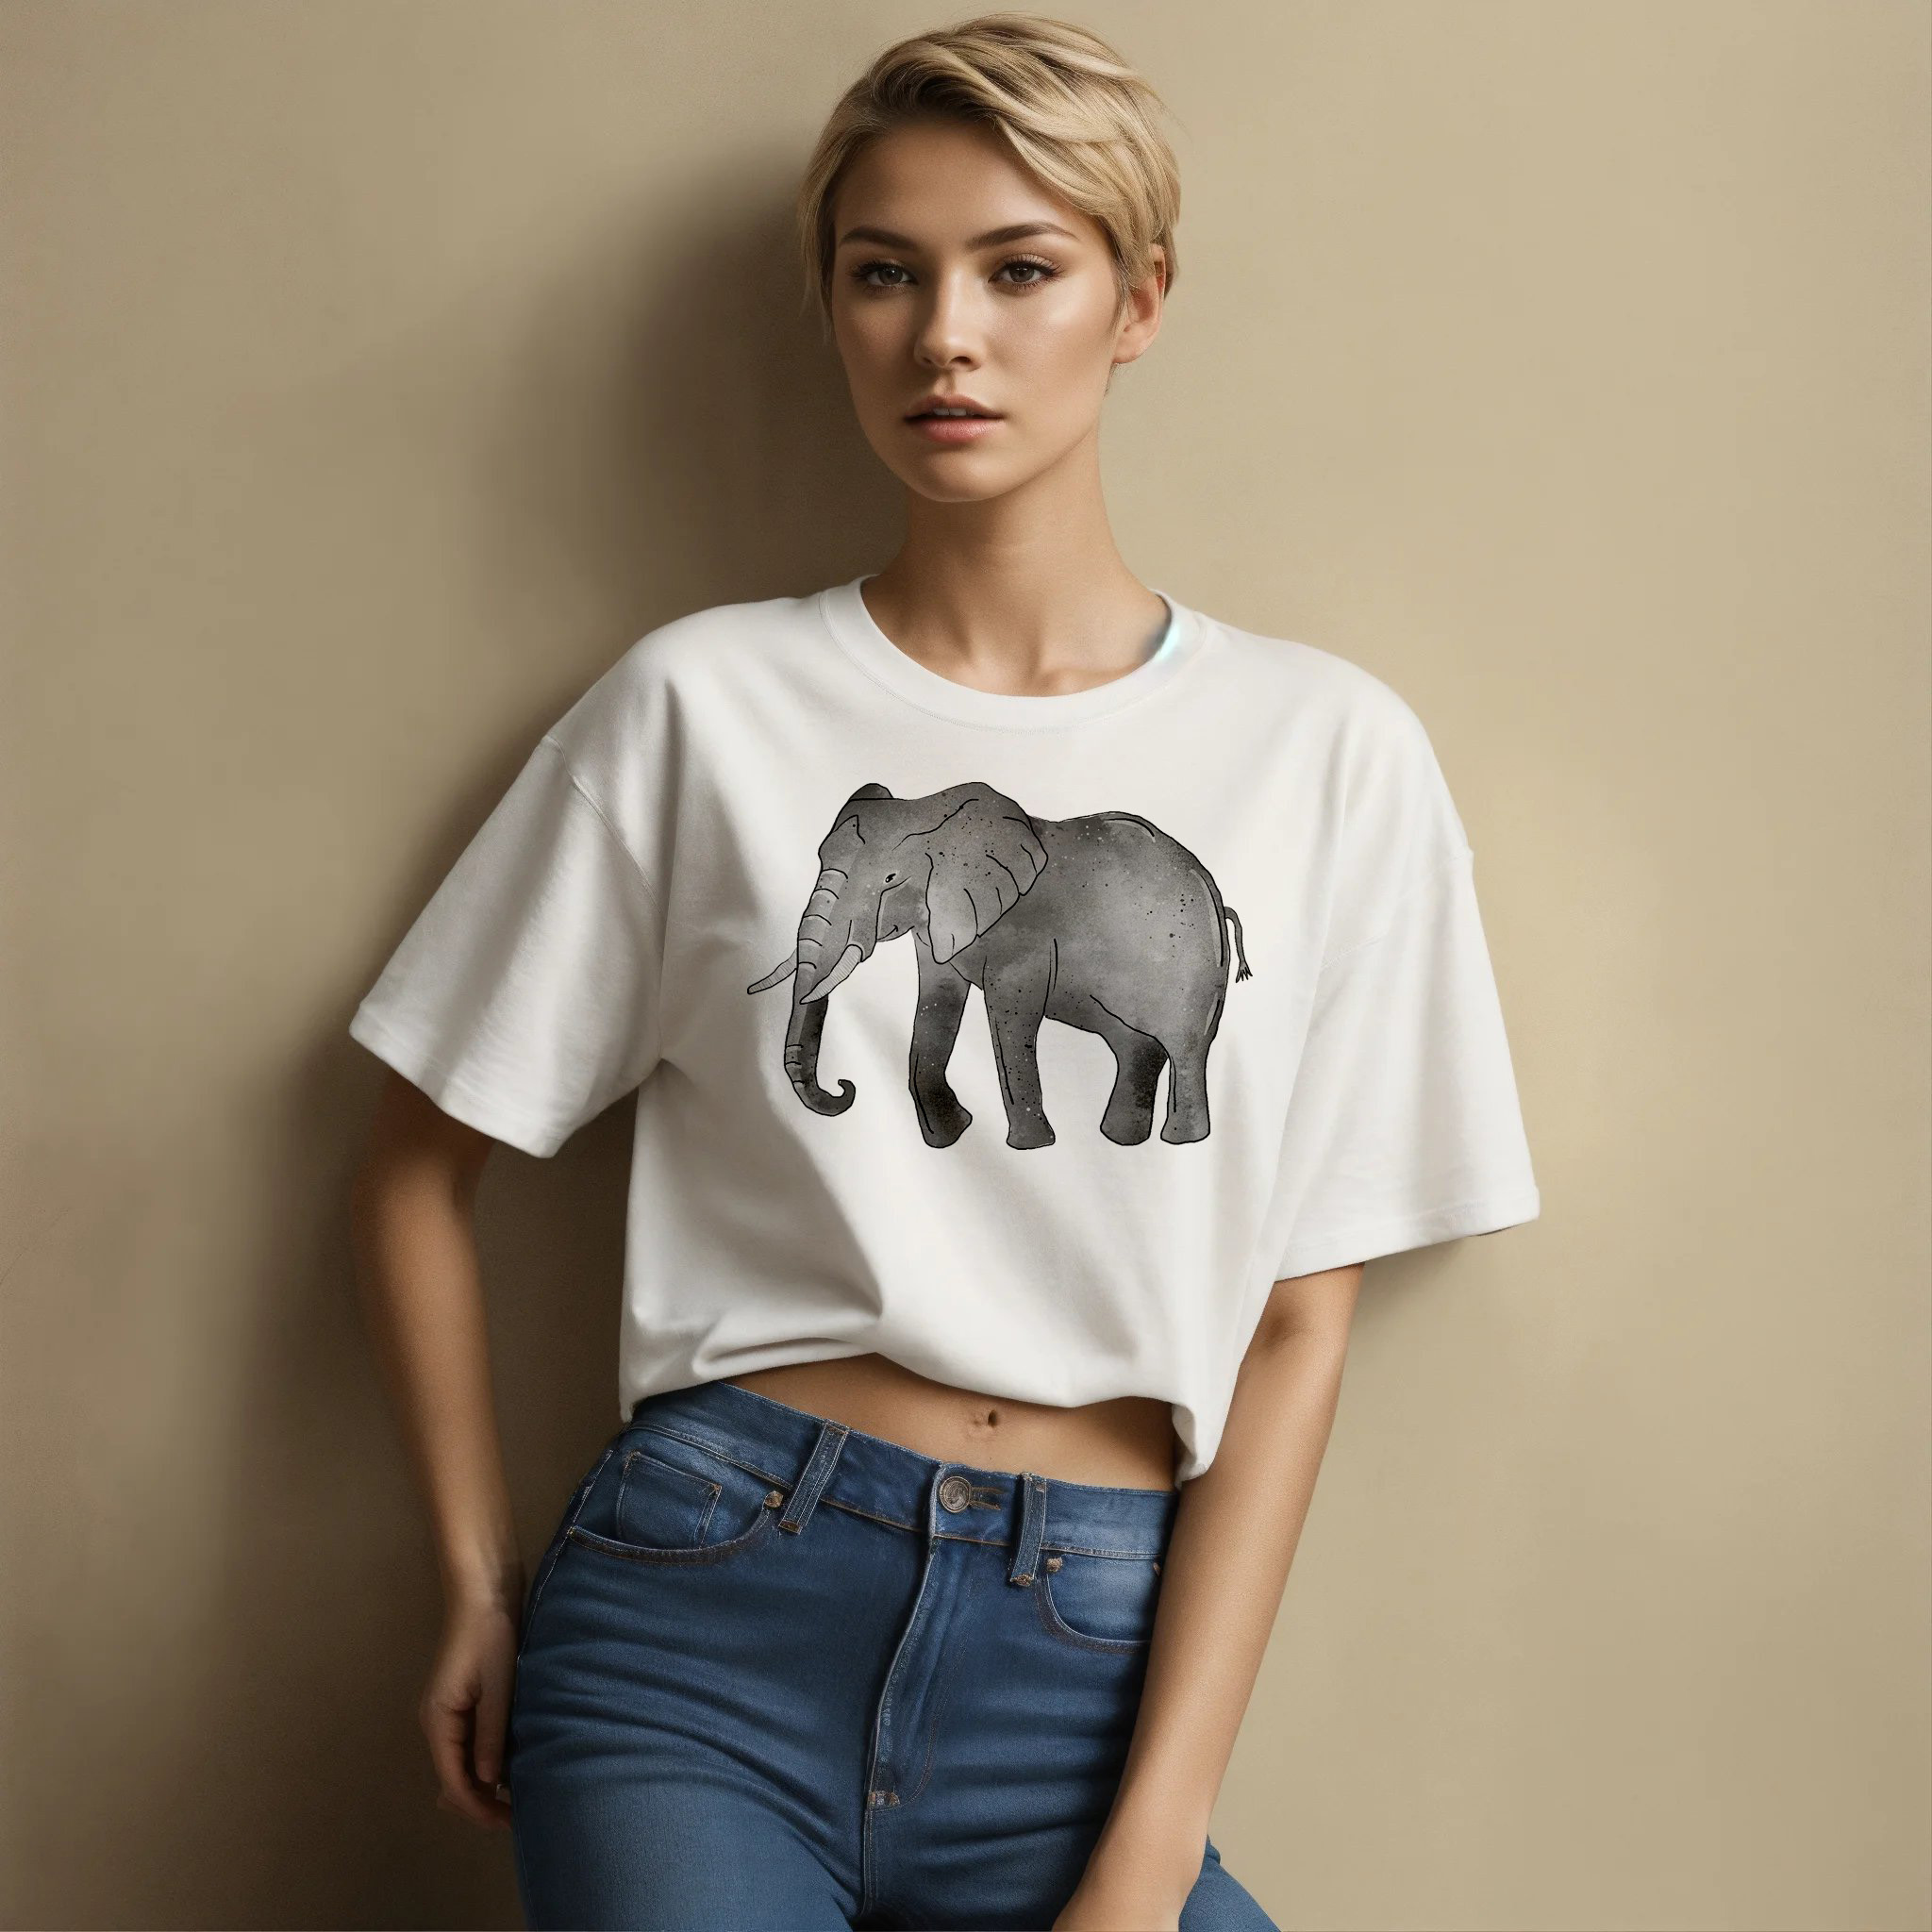 Bügelbild Fanti Elefant Kollektion Wild Animal ca. 25x18 cm BxH